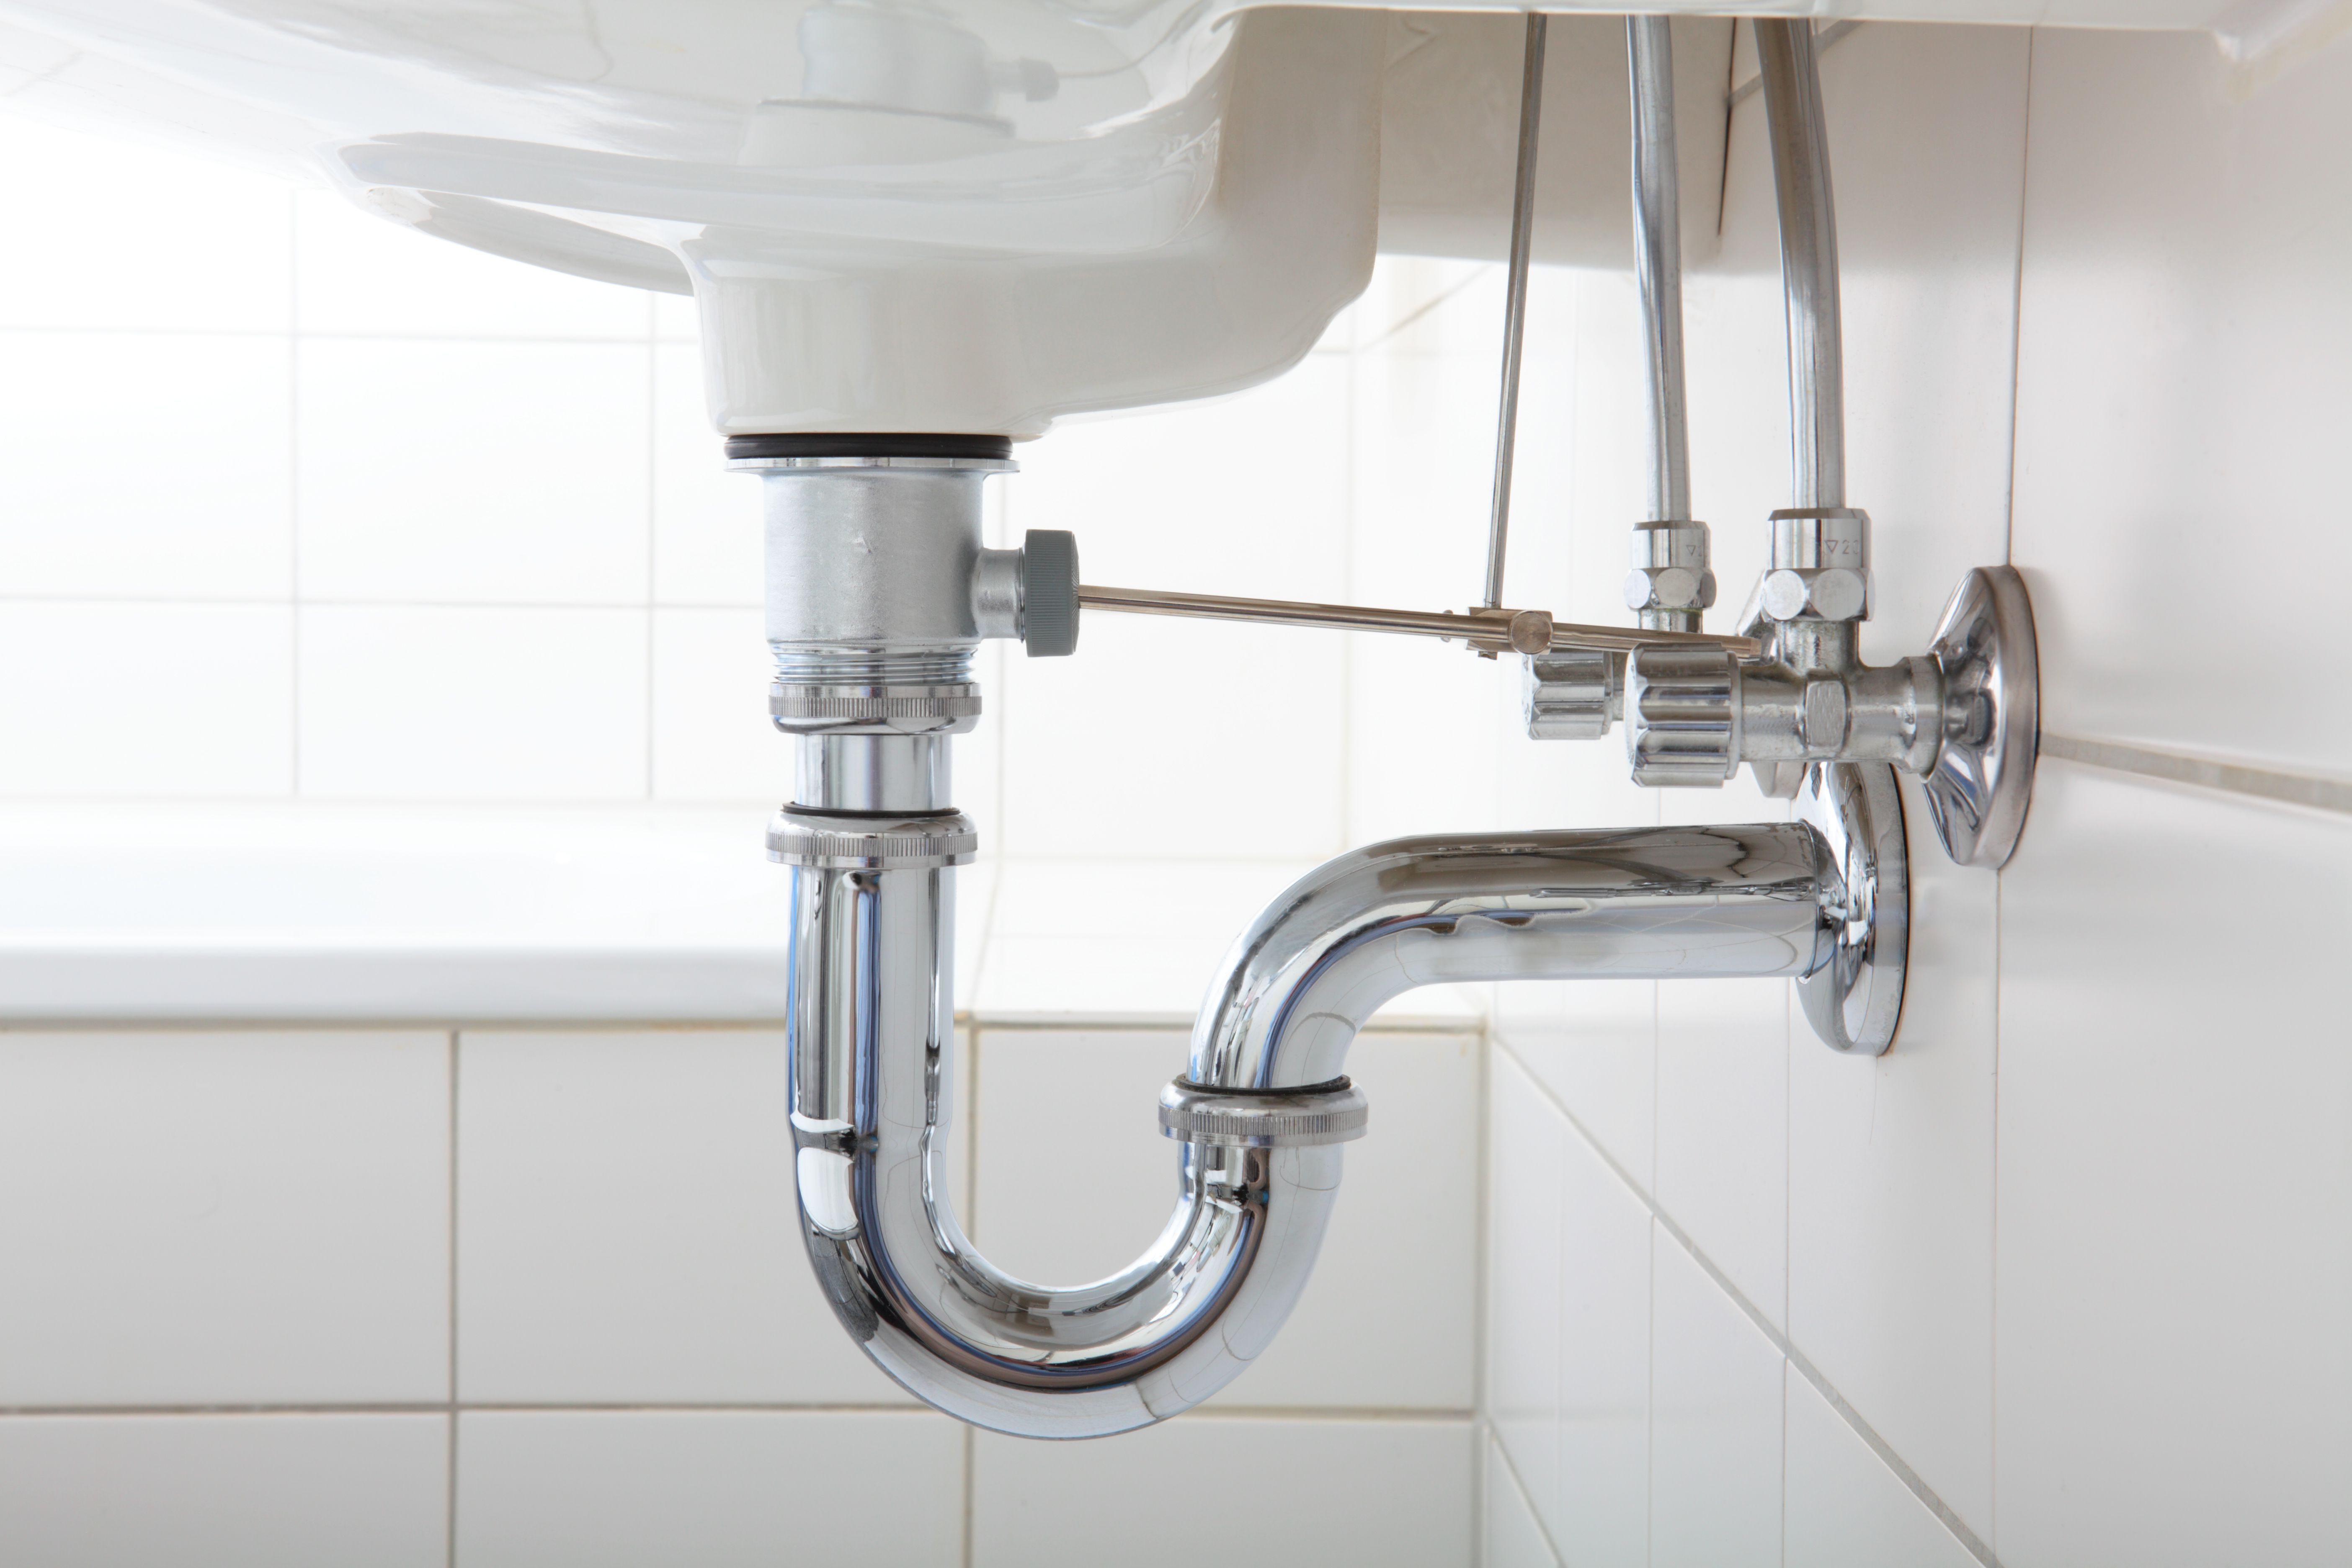 should bathroom sinks have shutoff valves